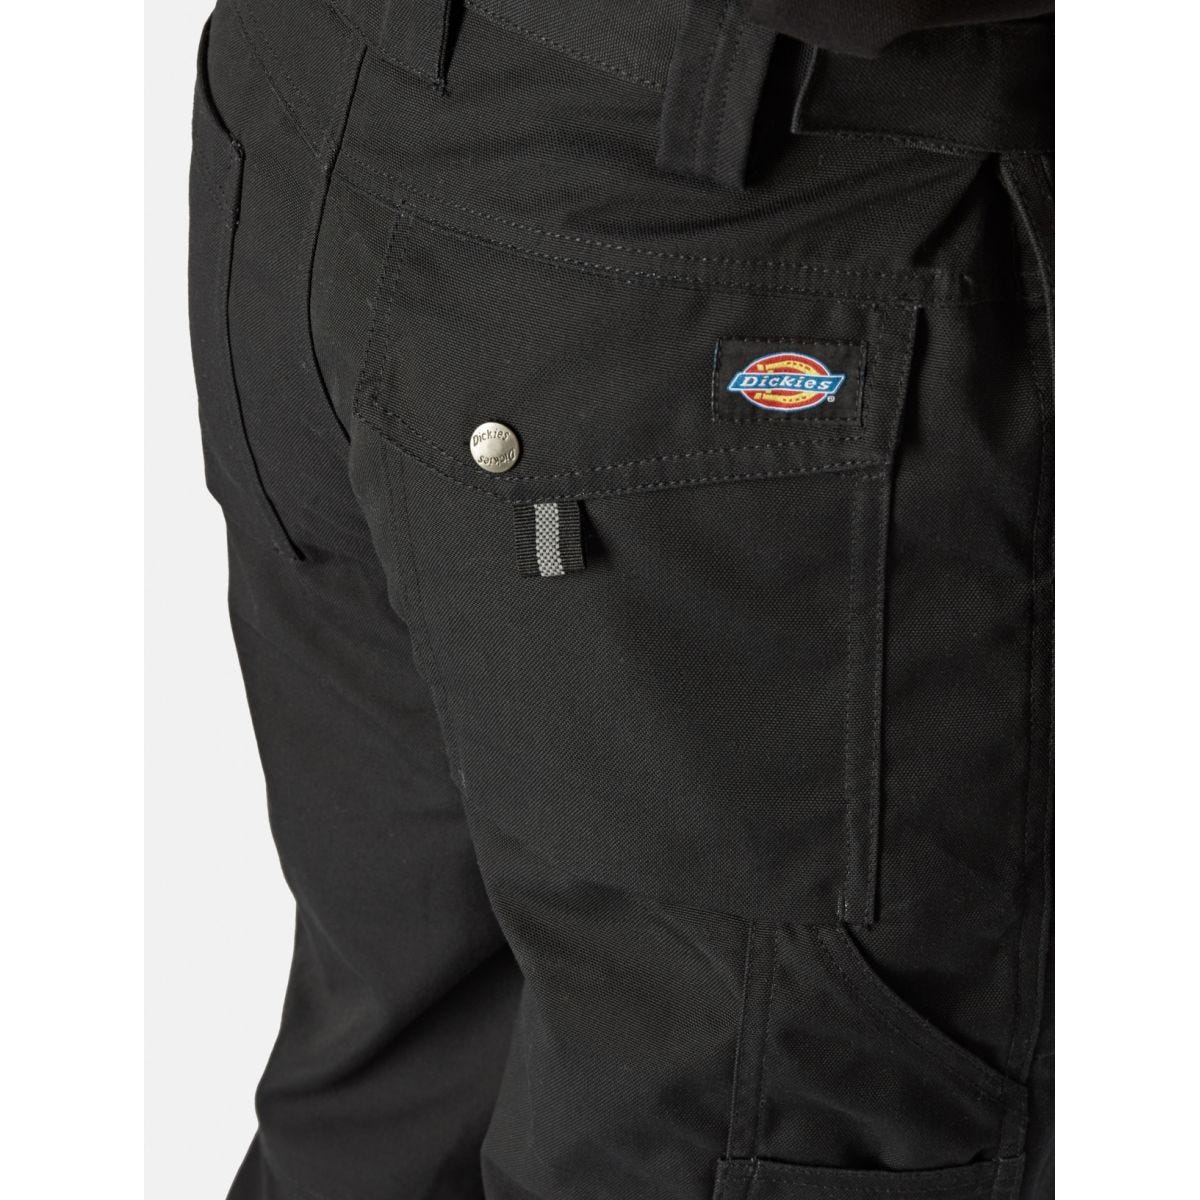 Pantalon Eisenhower multi-poches Noir - Dickies - Taille 46 3